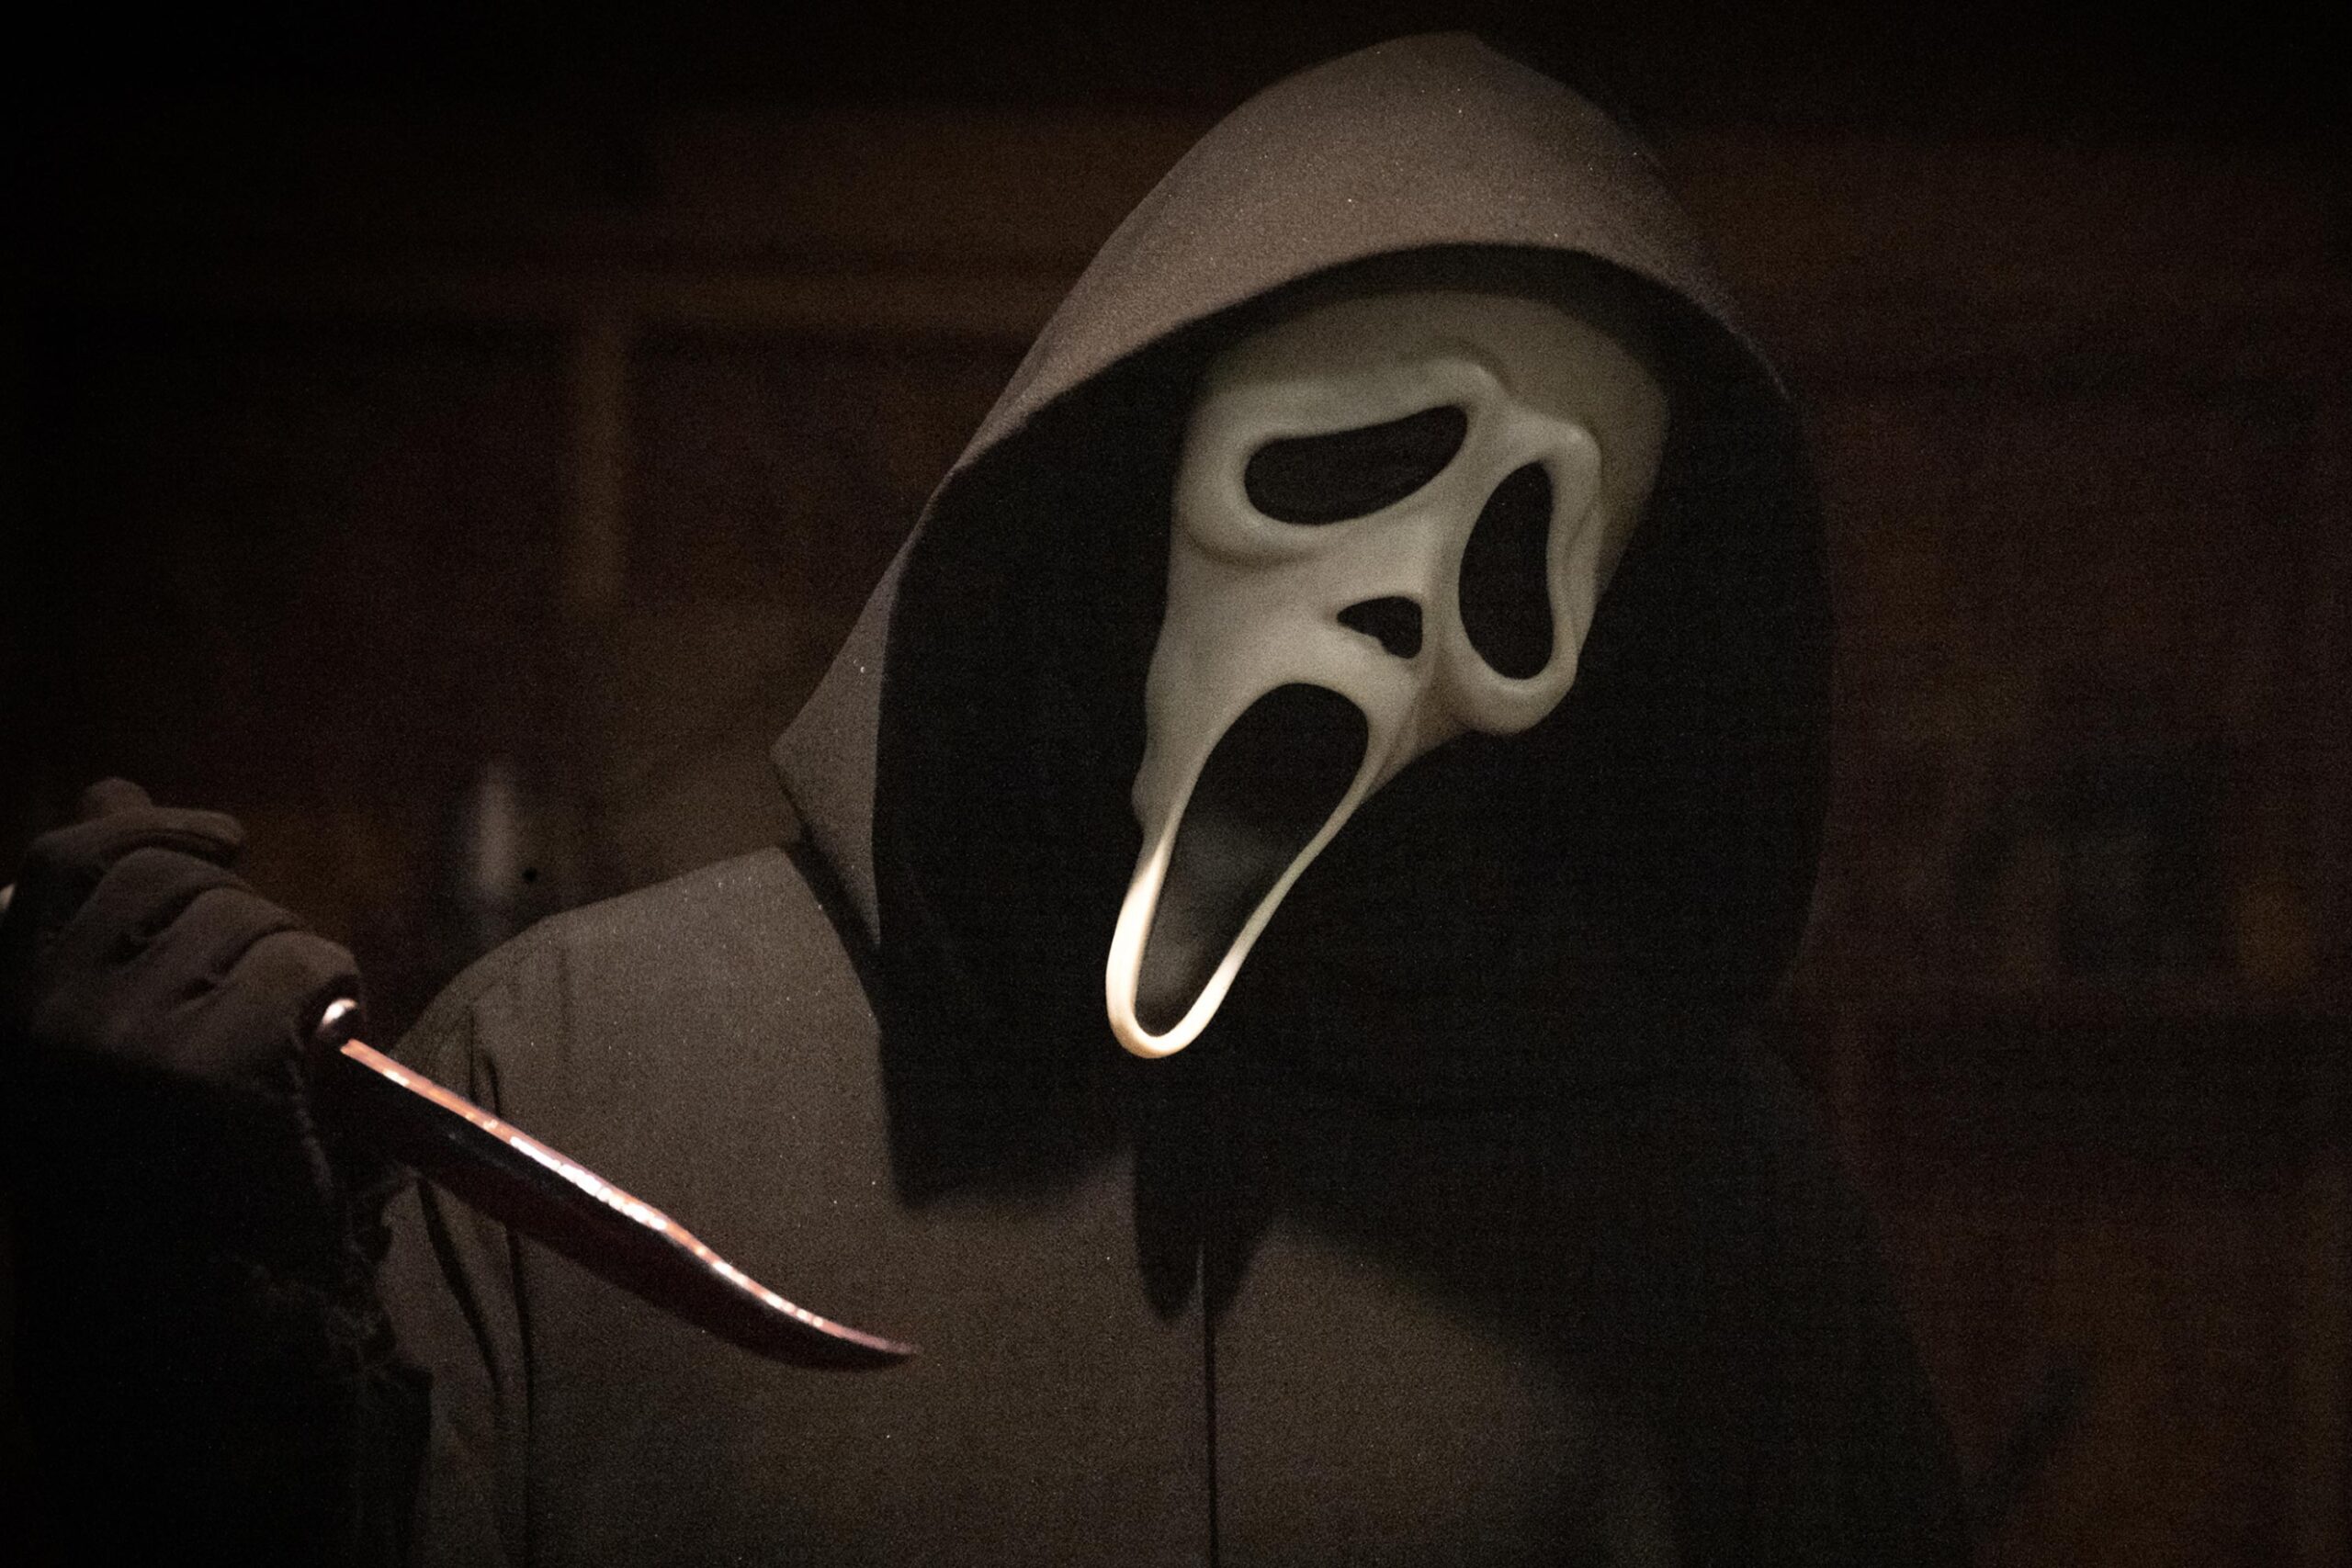 Scream 6: The Most Disturbing Moments, Ranked